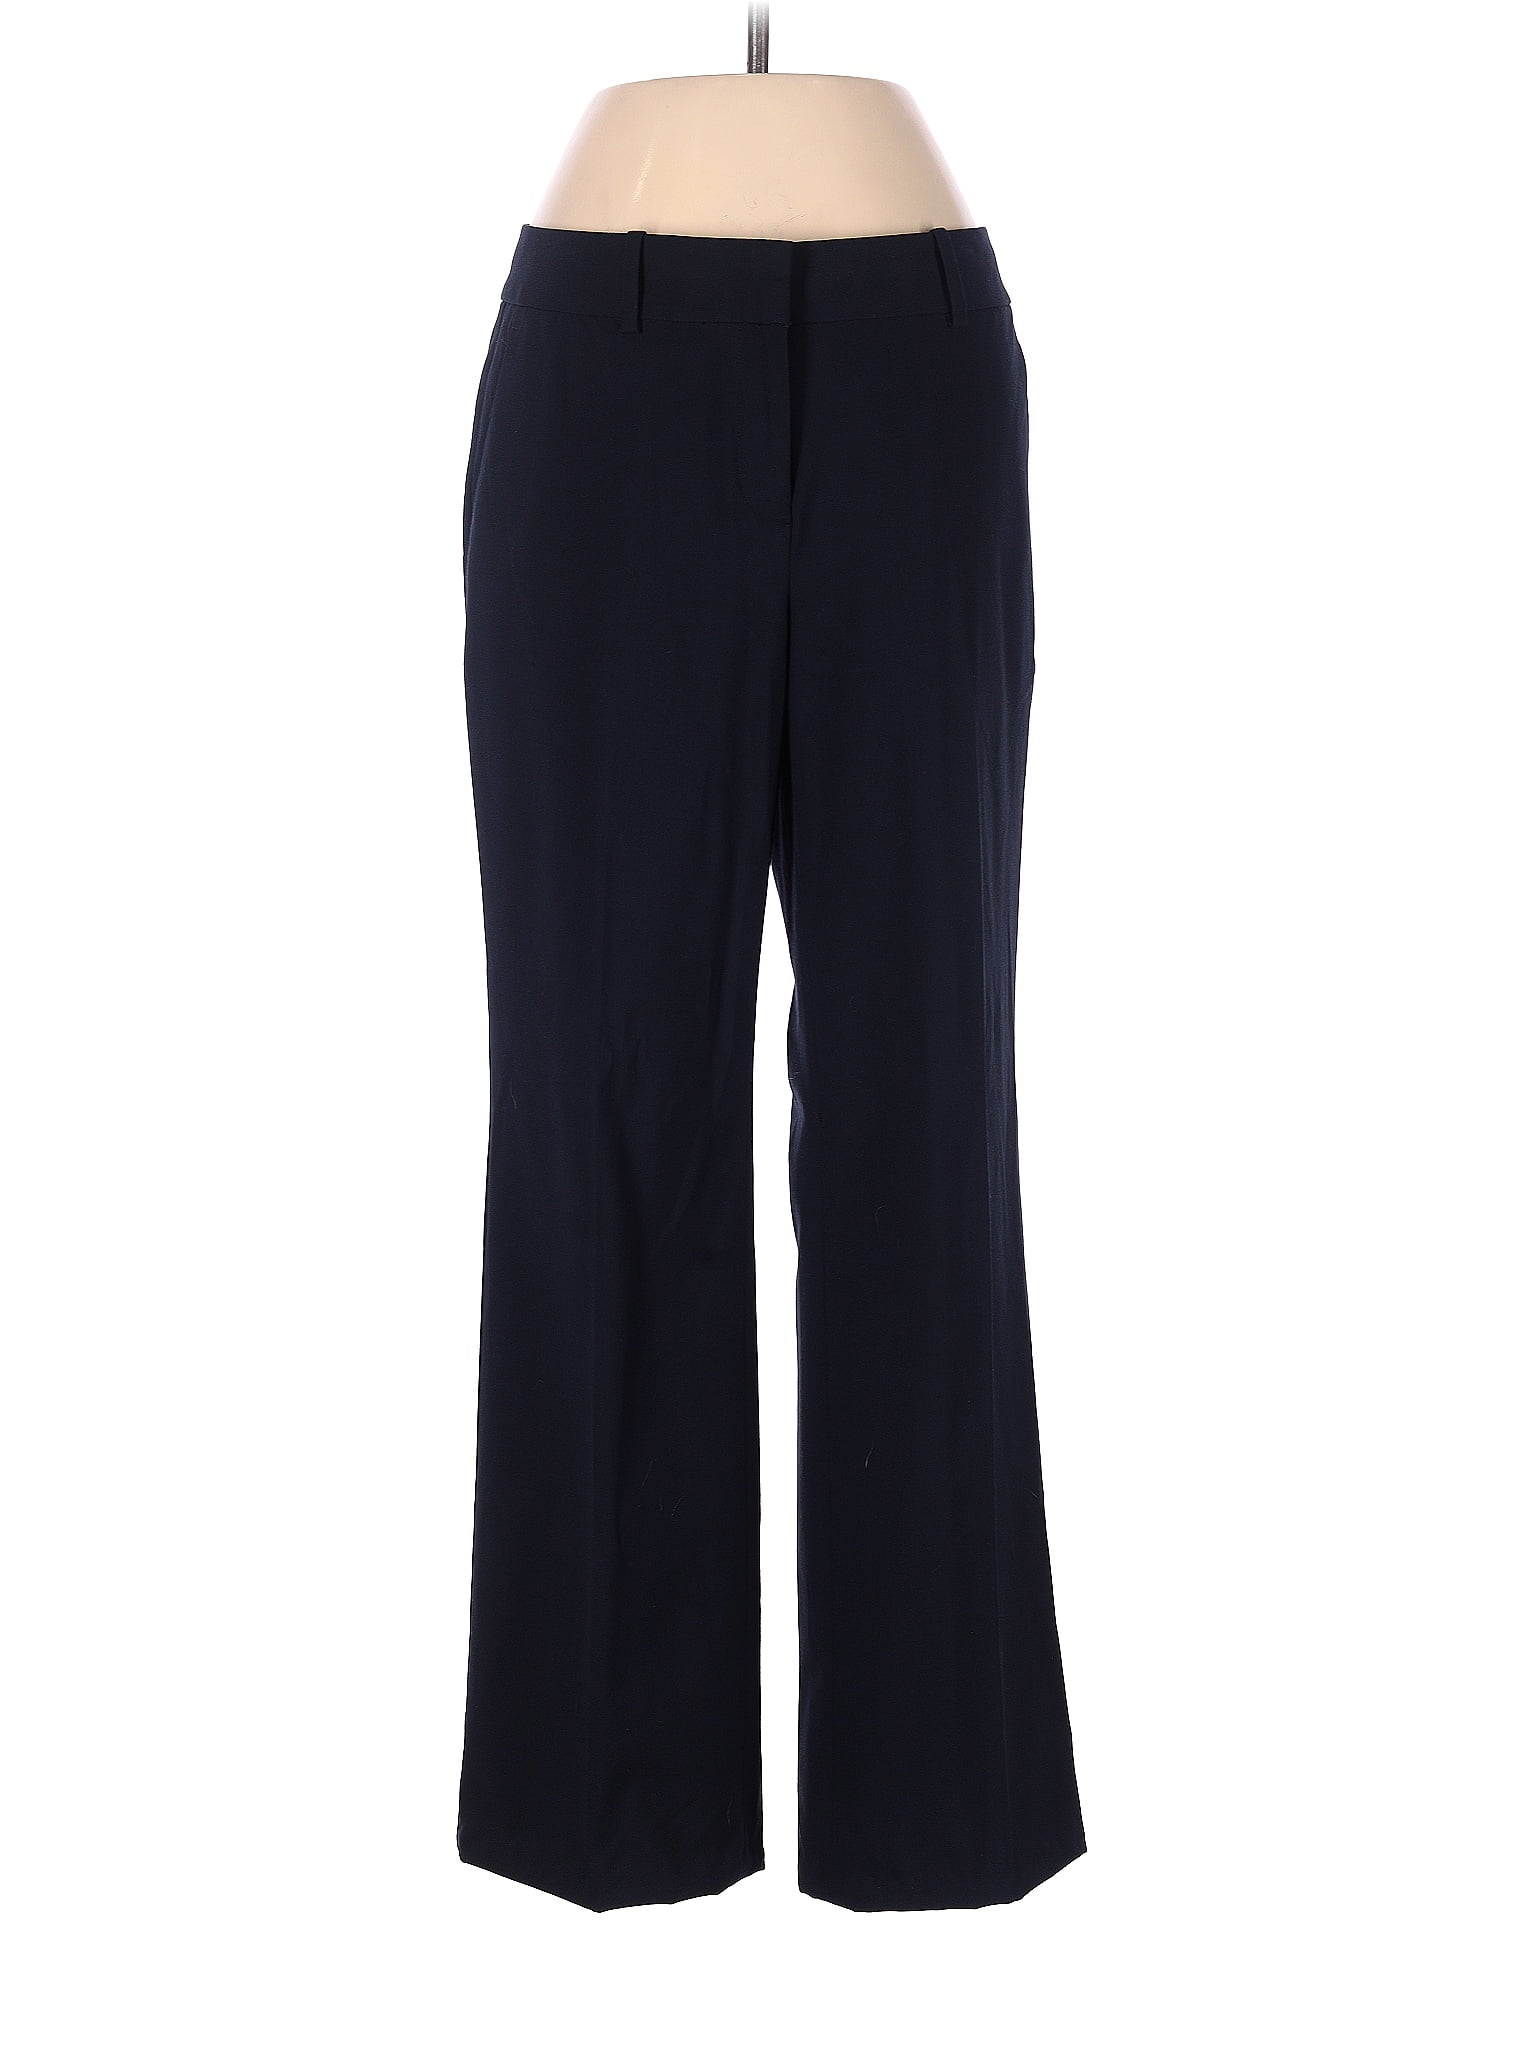 Ann Taylor Polka Dots Navy Blue Dress Pants Size 2 (Petite) - 80% off ...